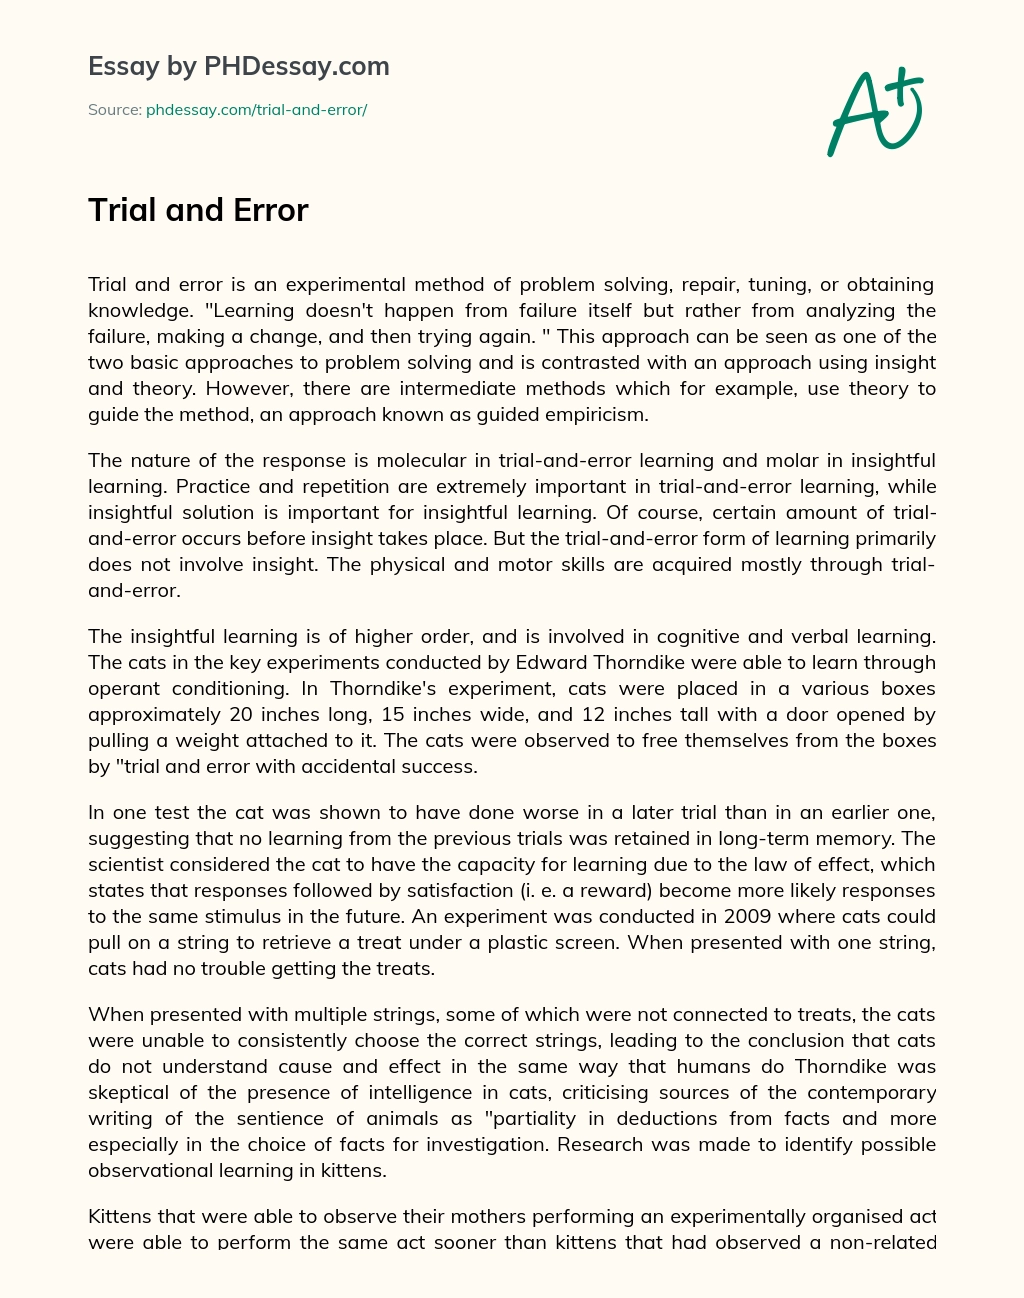 Trial and Error essay